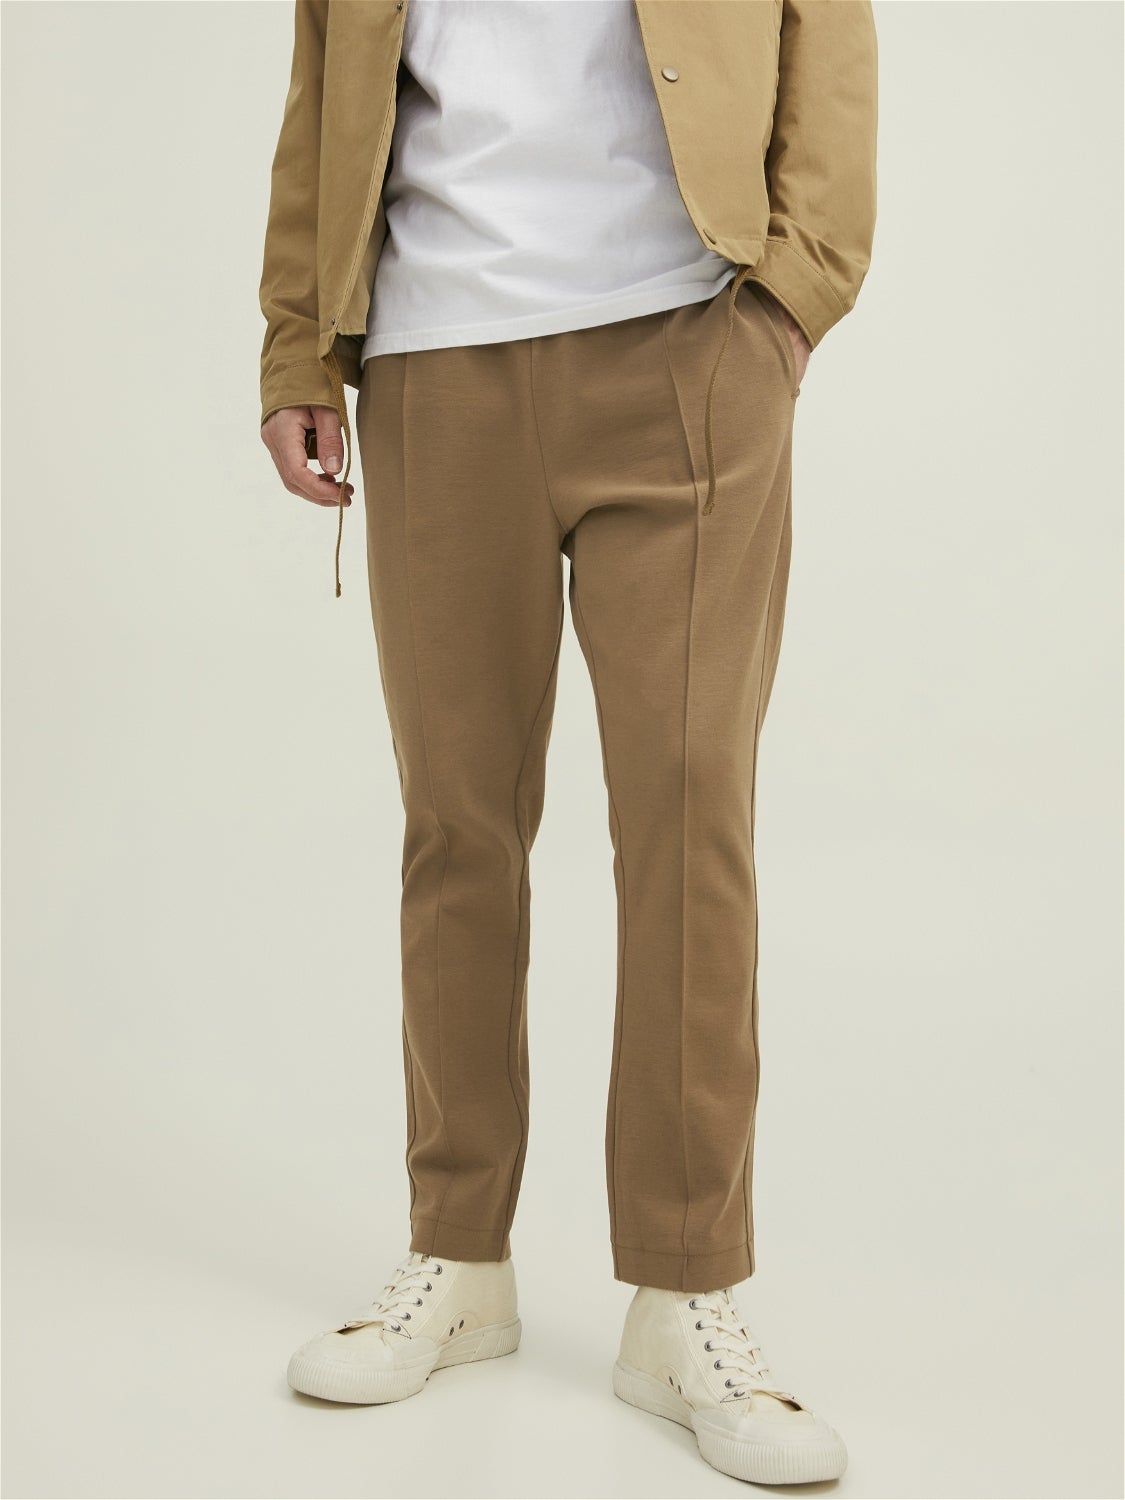 Men's brown Trousers | Brown pants men, Brown pants outfit, Pants outfit men